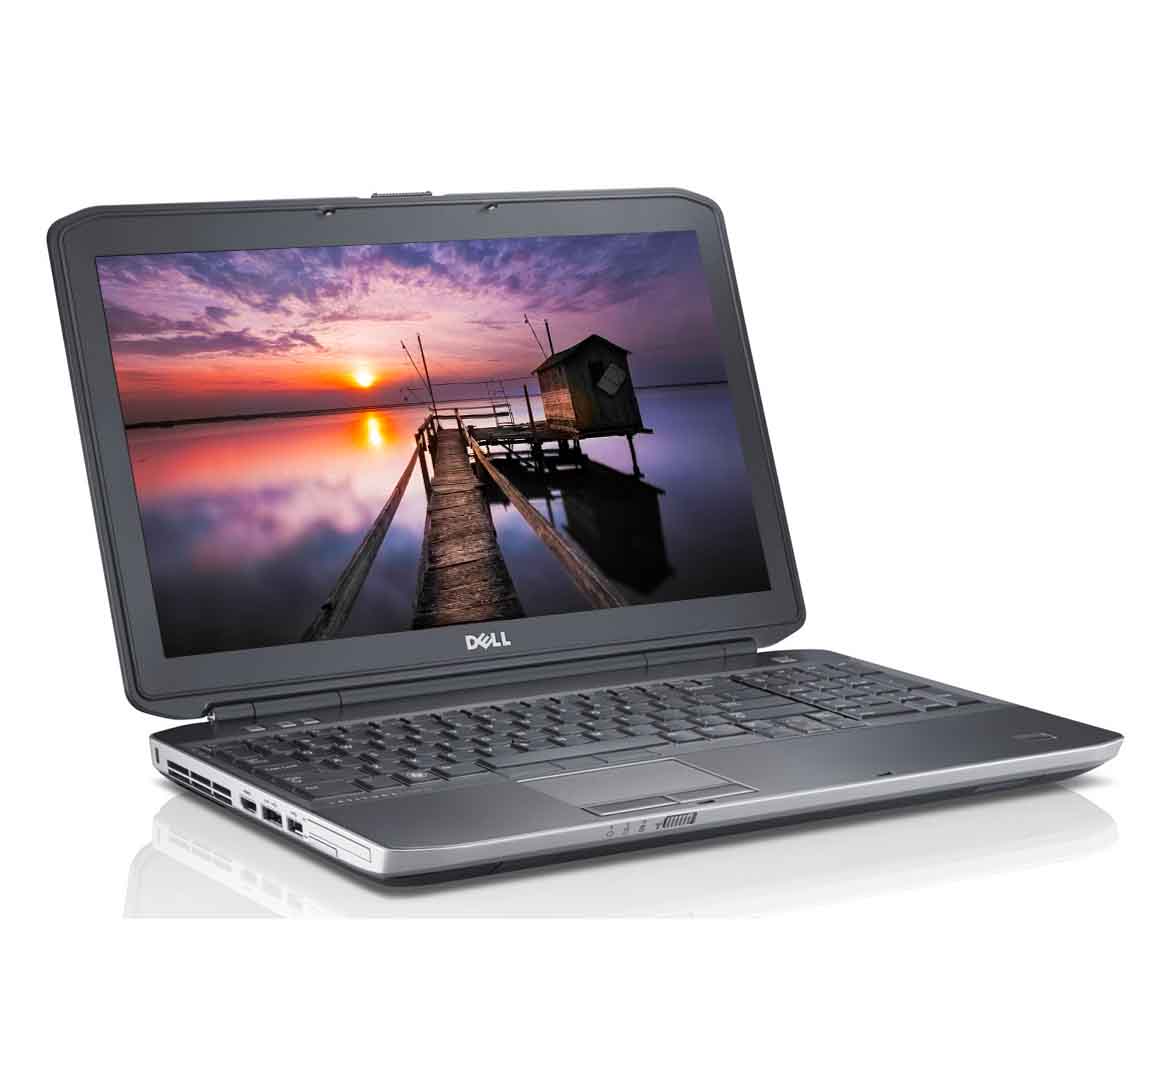 Dell Latitude E5530, Intel Core i3-3rd Gen CPU, 4GB RAM, 320GB HDD, 15.6 inch Display, Intel HD Graphics 4000, Win 10 Pro, Refurbished Laptop